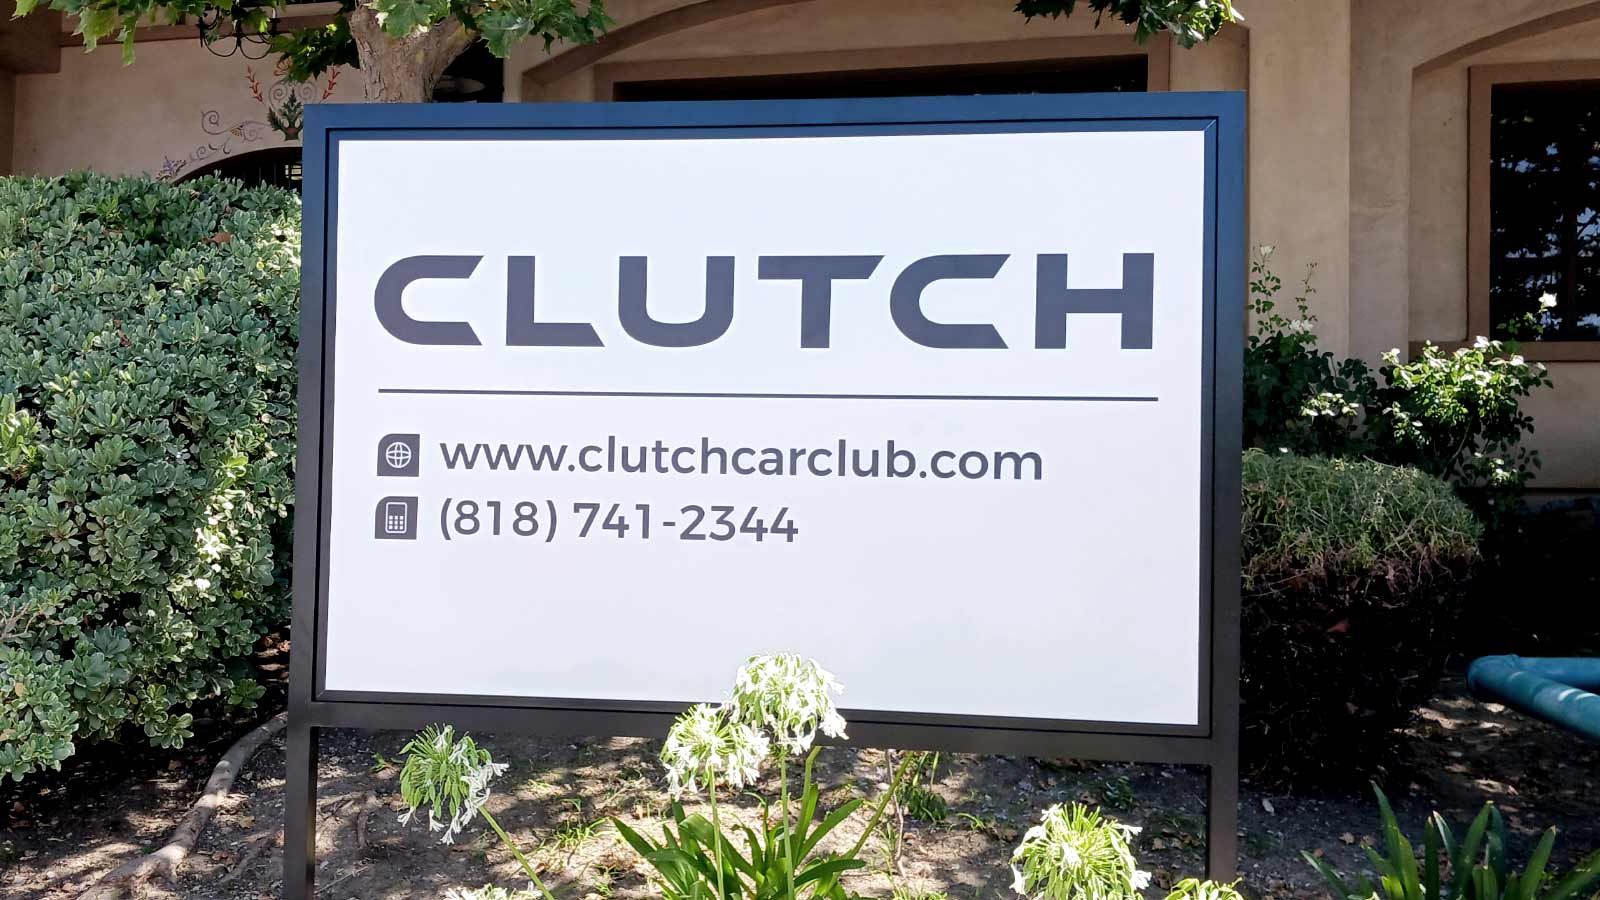 Clutch Car Club yard sign installed outdoors